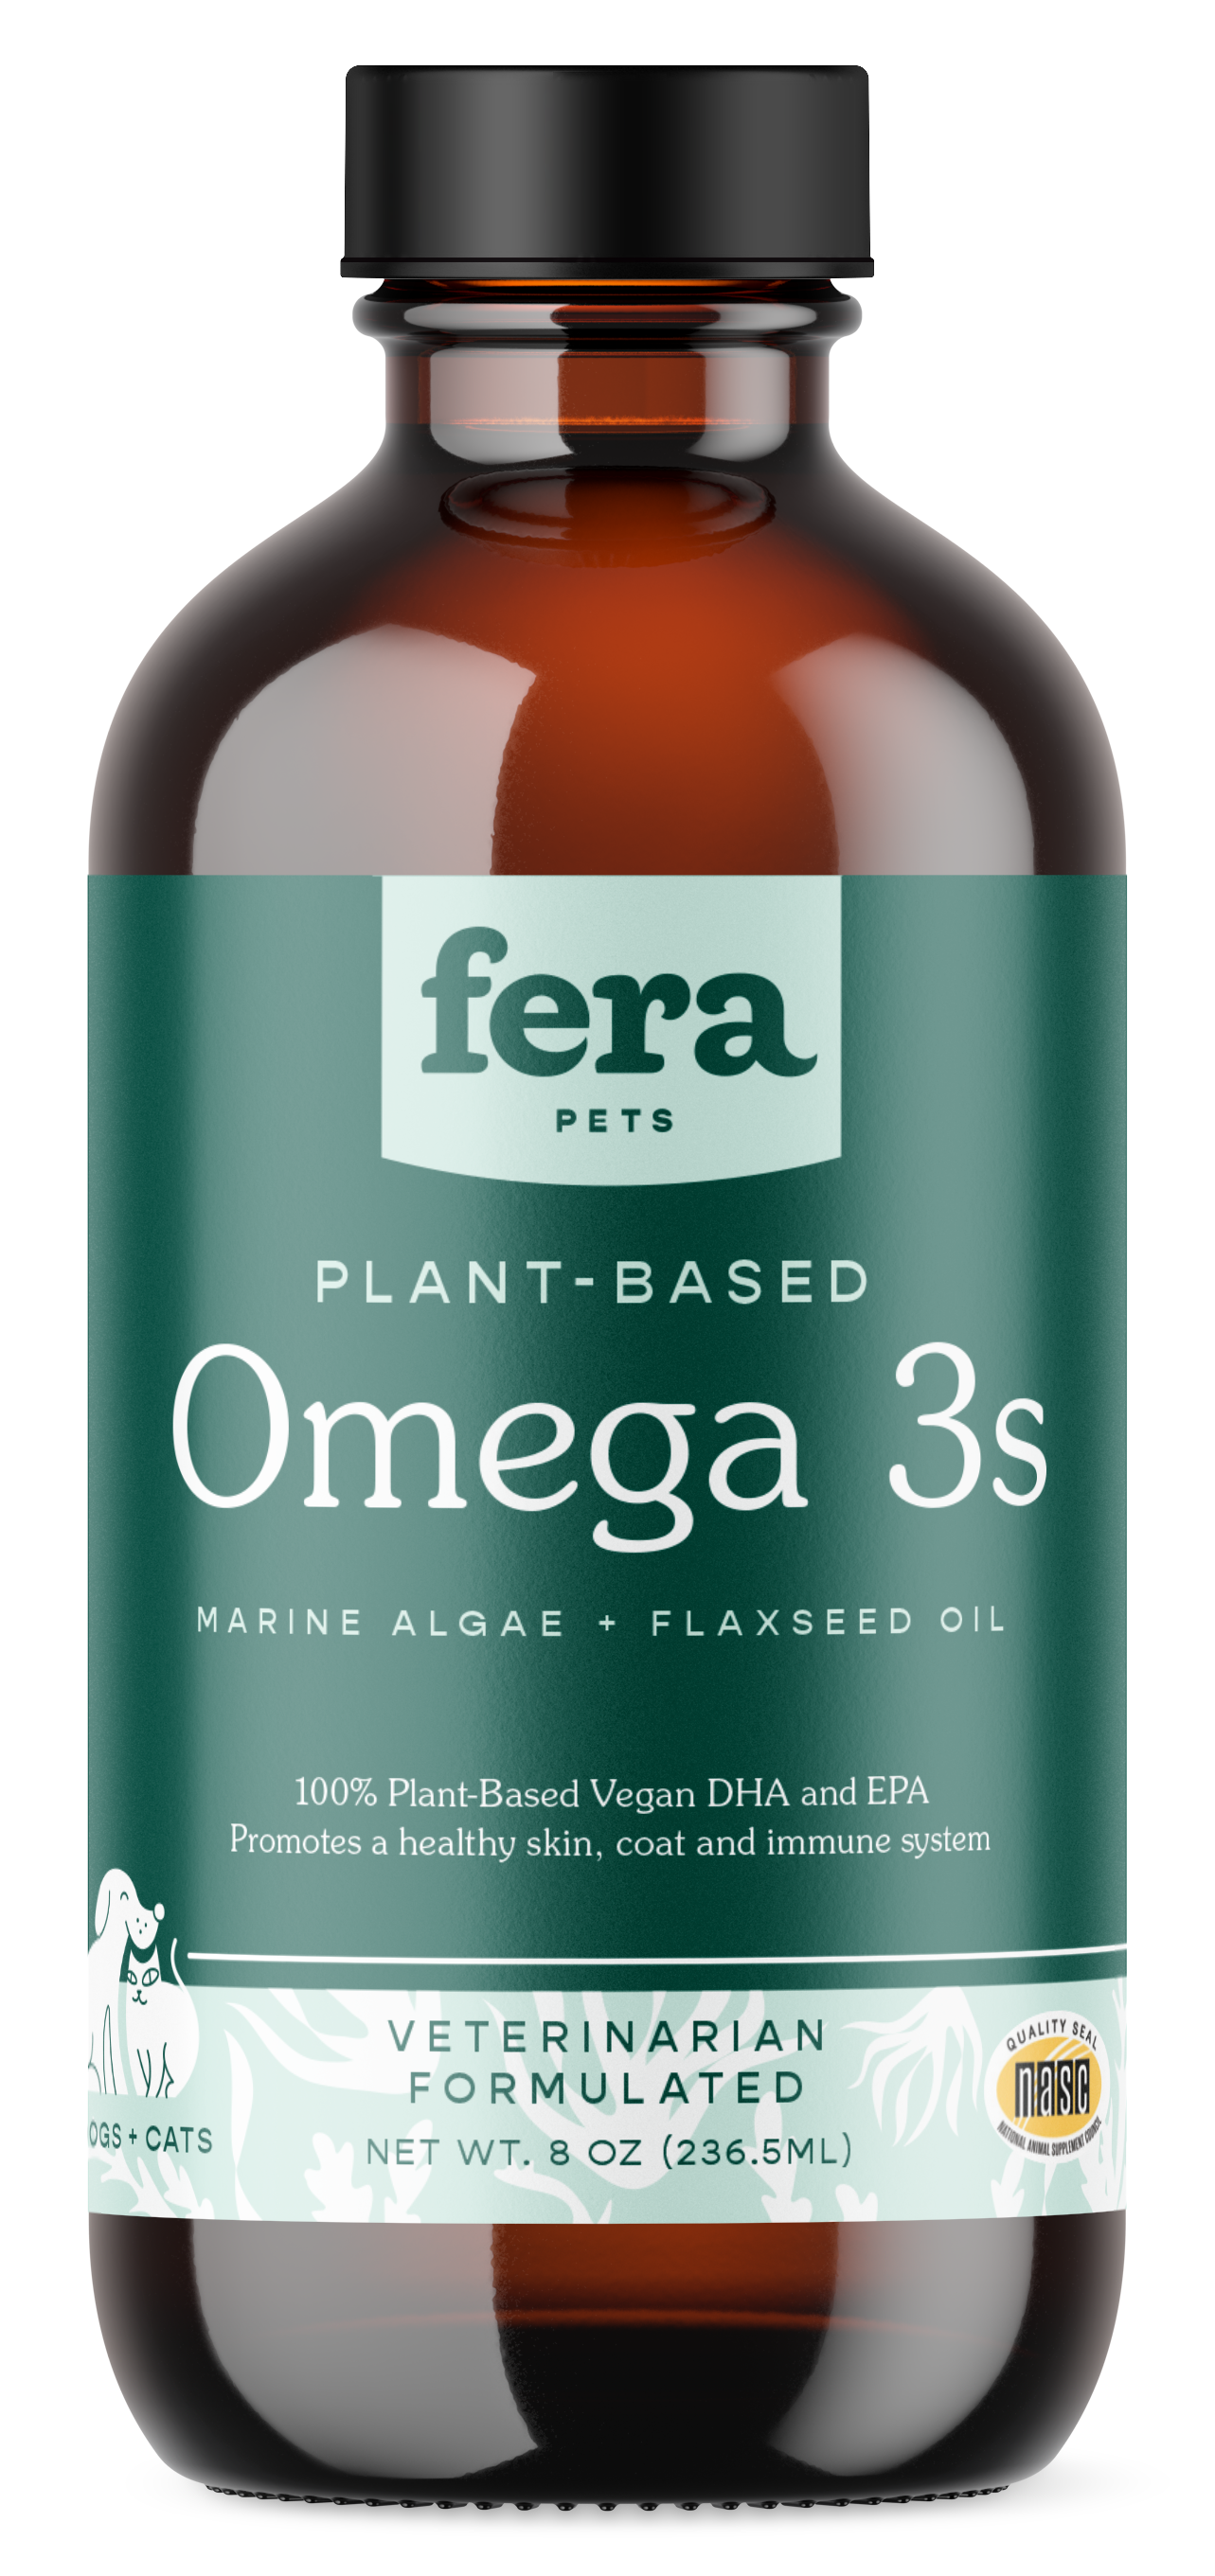 Fera Pet Organics Vegan Omega-3s Algae Oil for Dogs and Cats